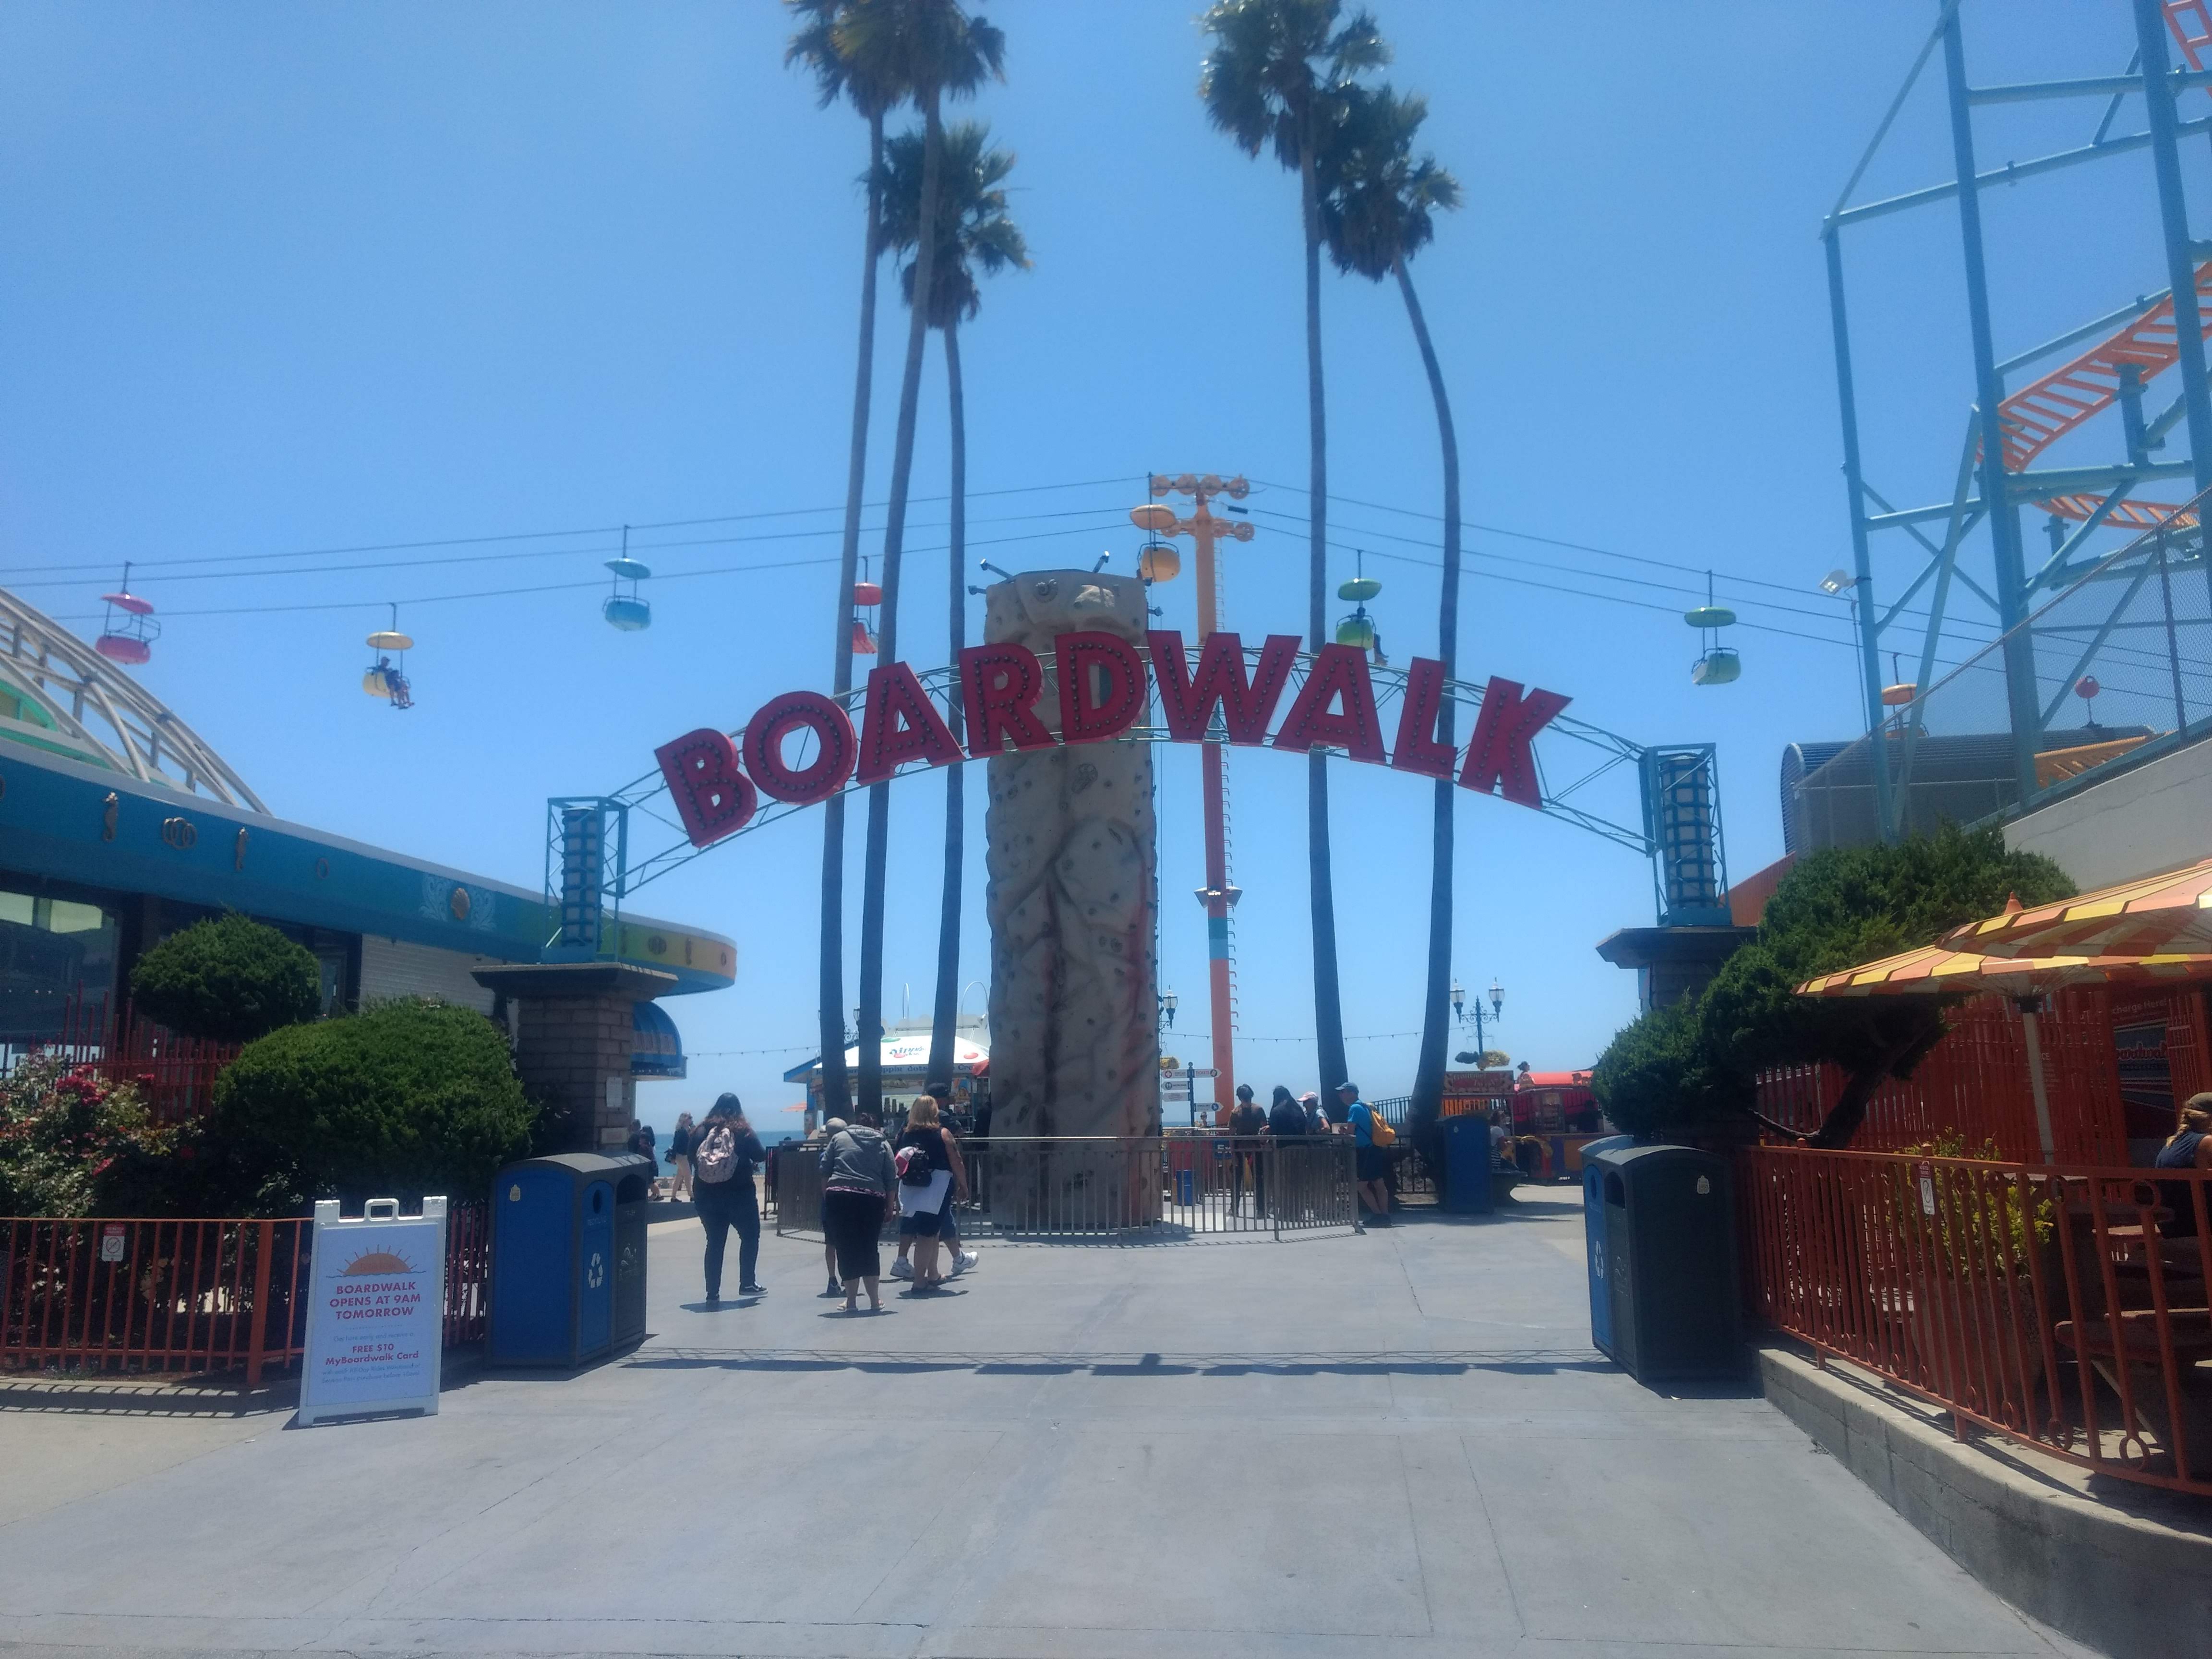 The Santa Cruz Boardwalk